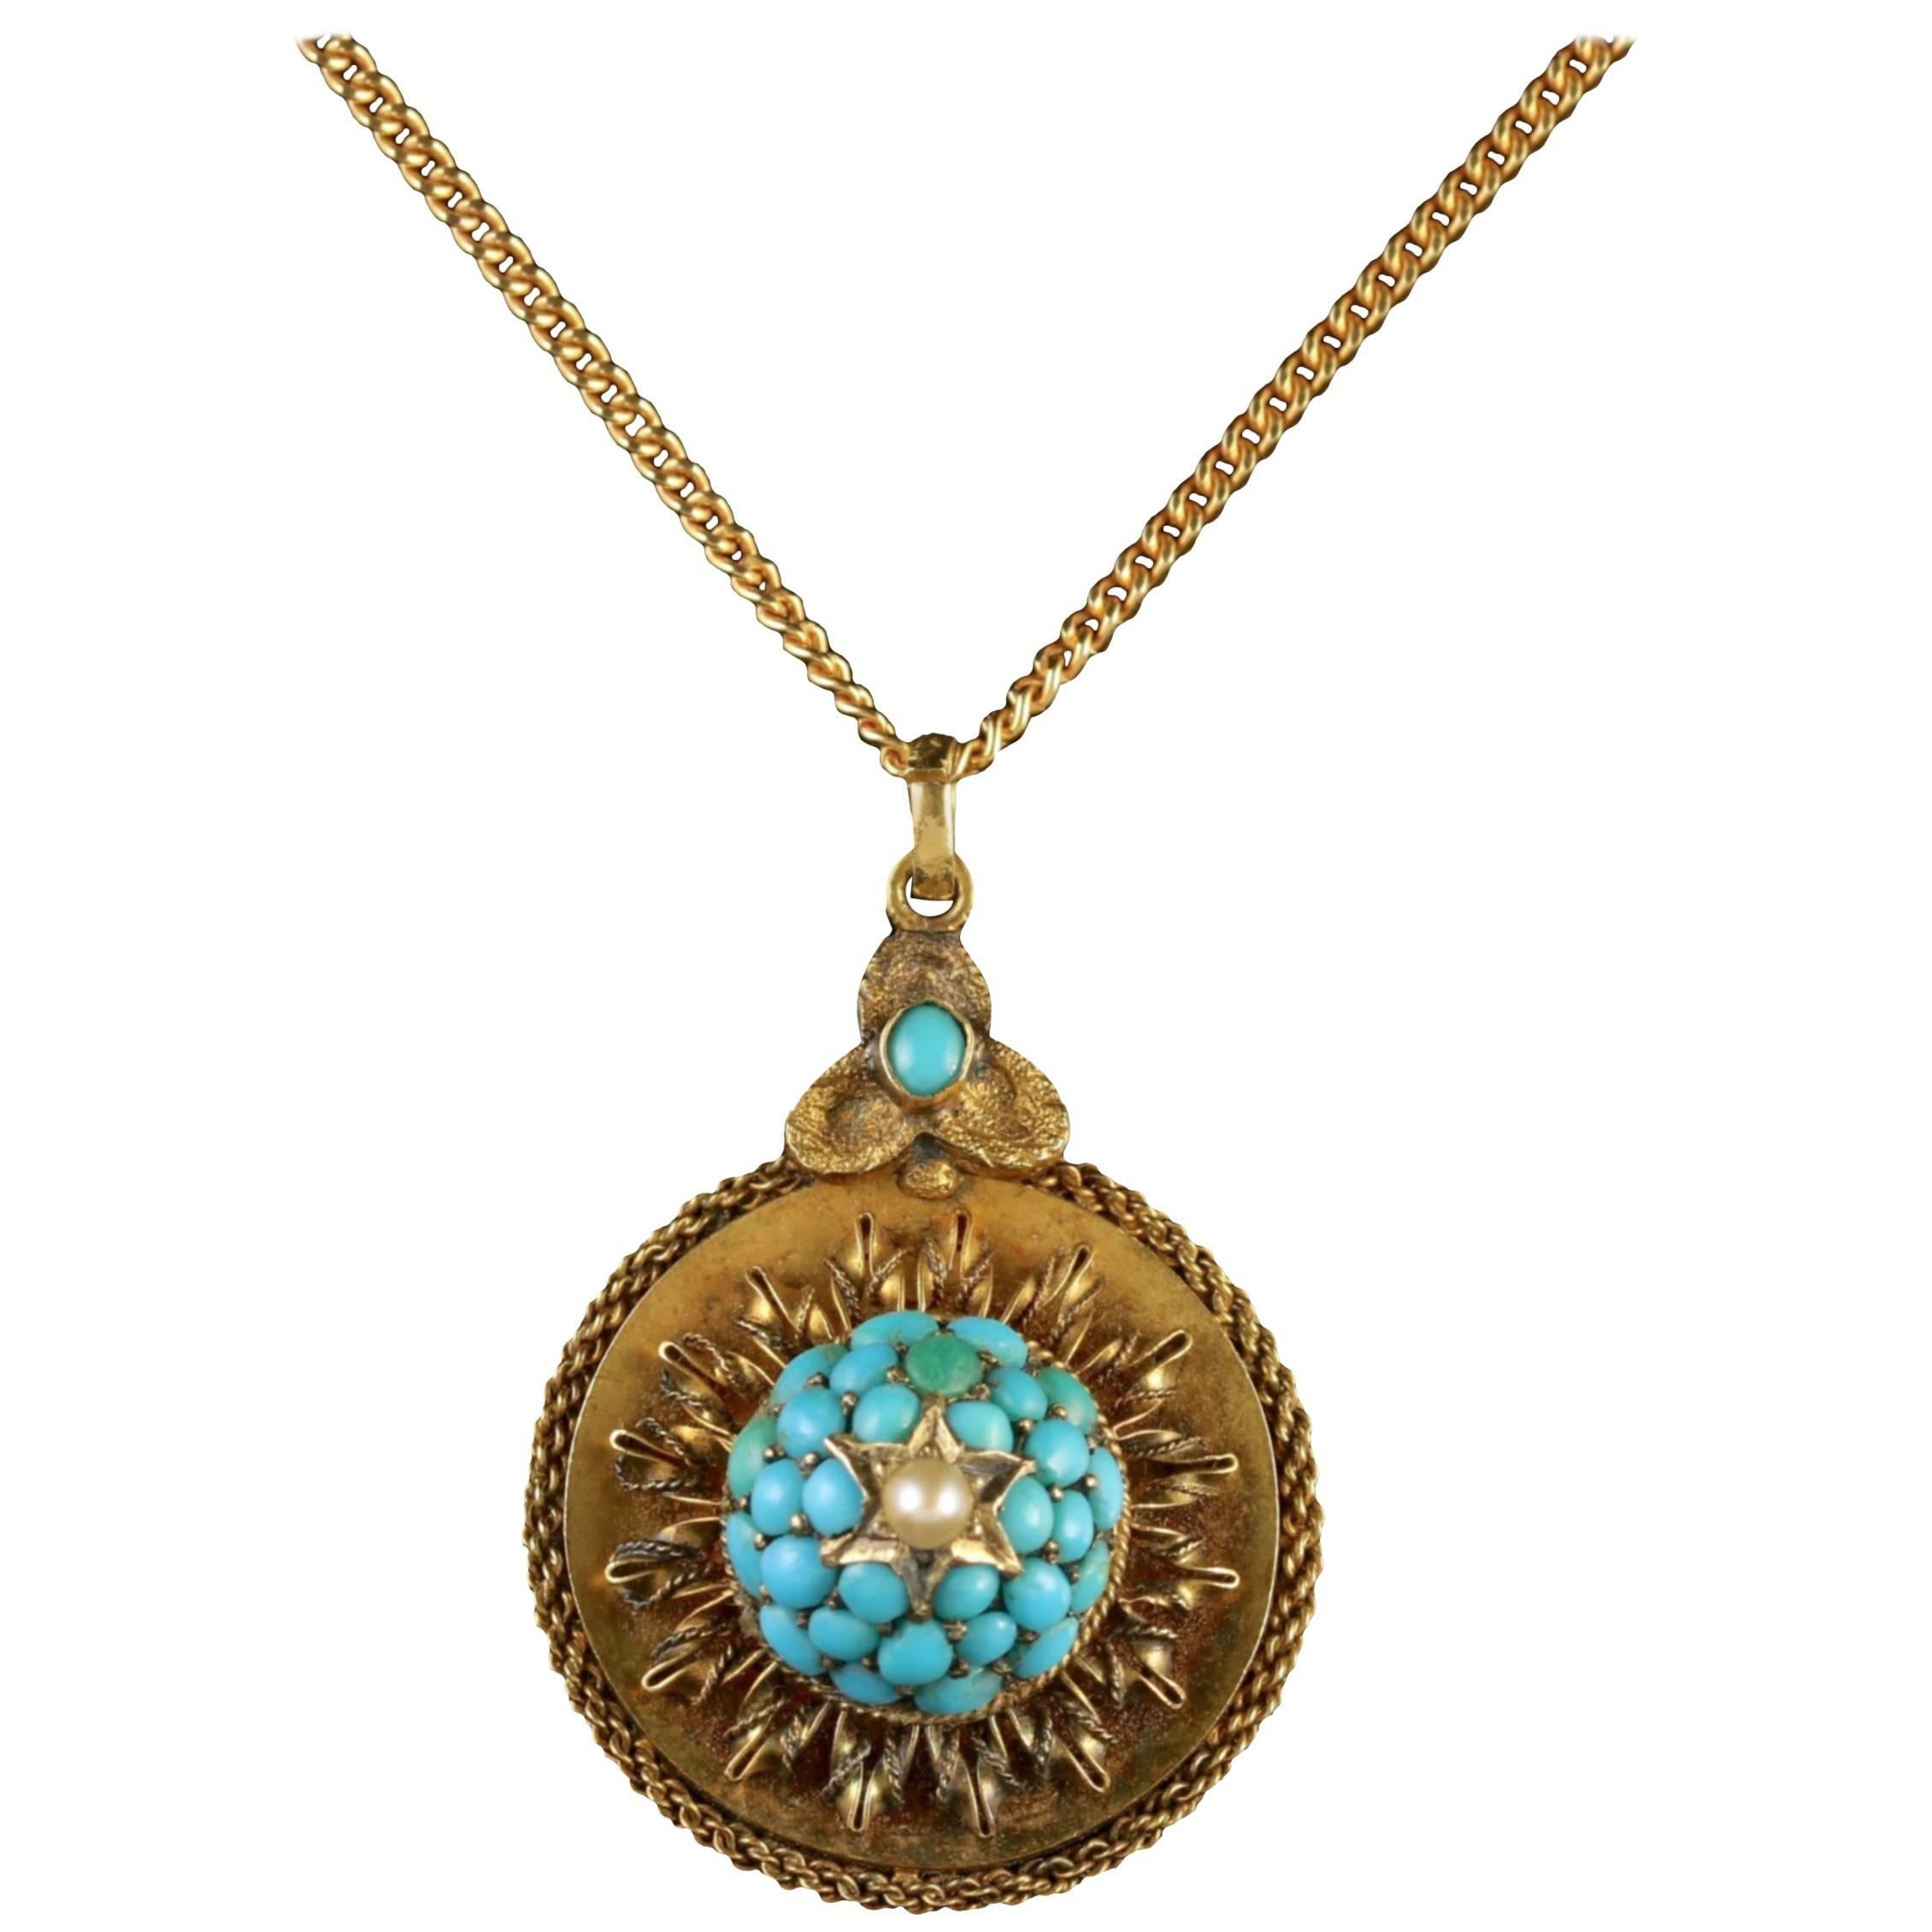 Antique Victorian Gold Turquoise Locket Pendant Necklace, circa 1880